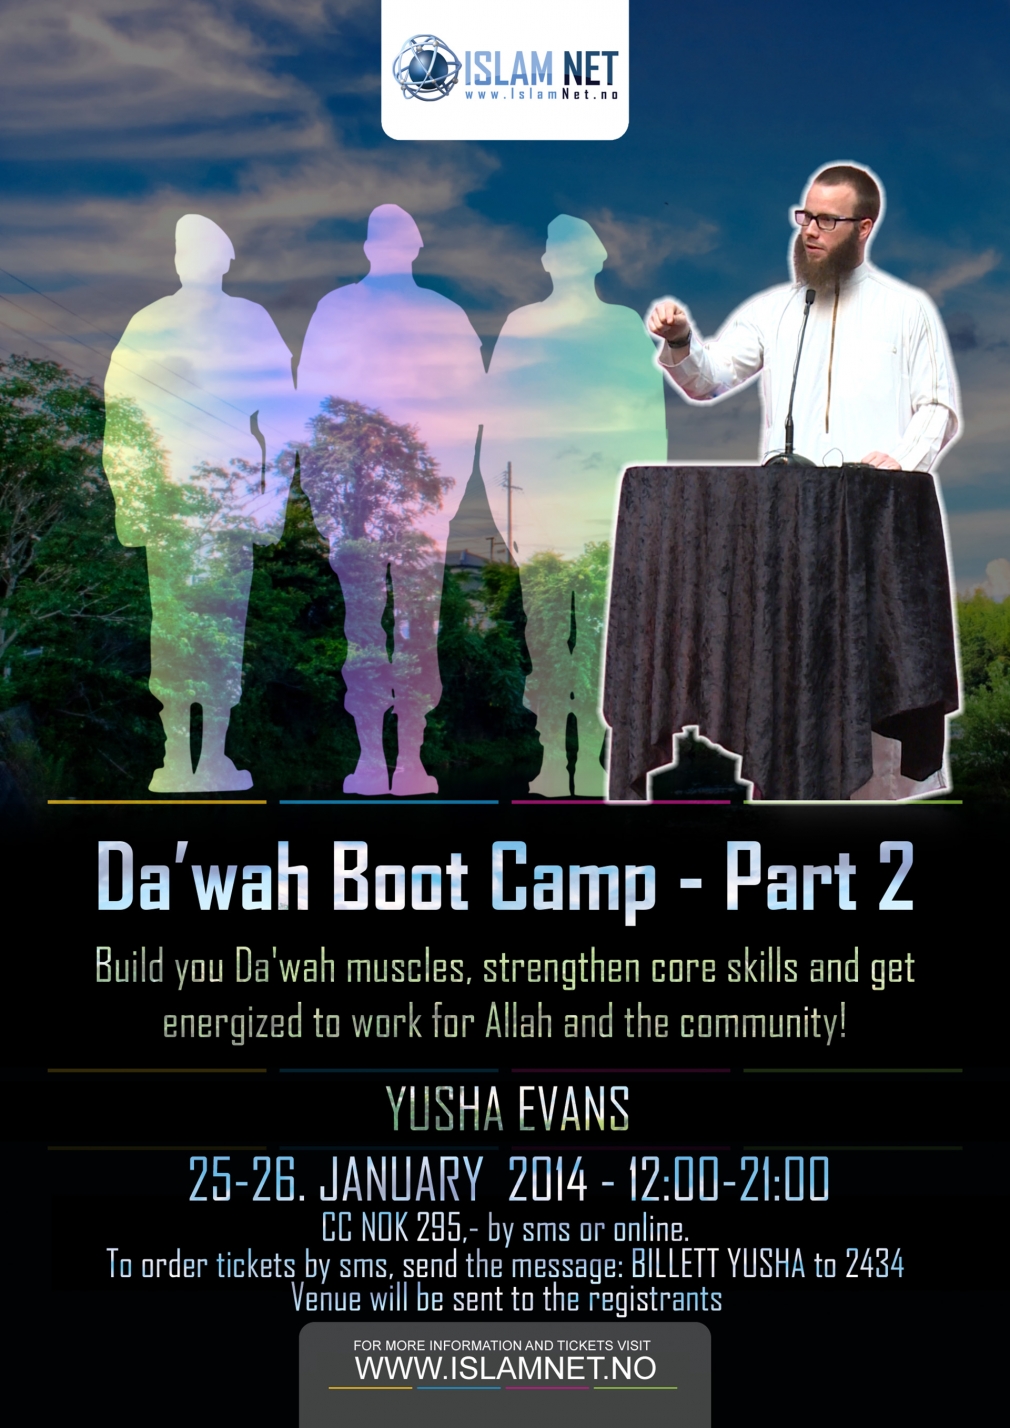 Da’wah Boot Camp - Part 2 - Yusha Evans